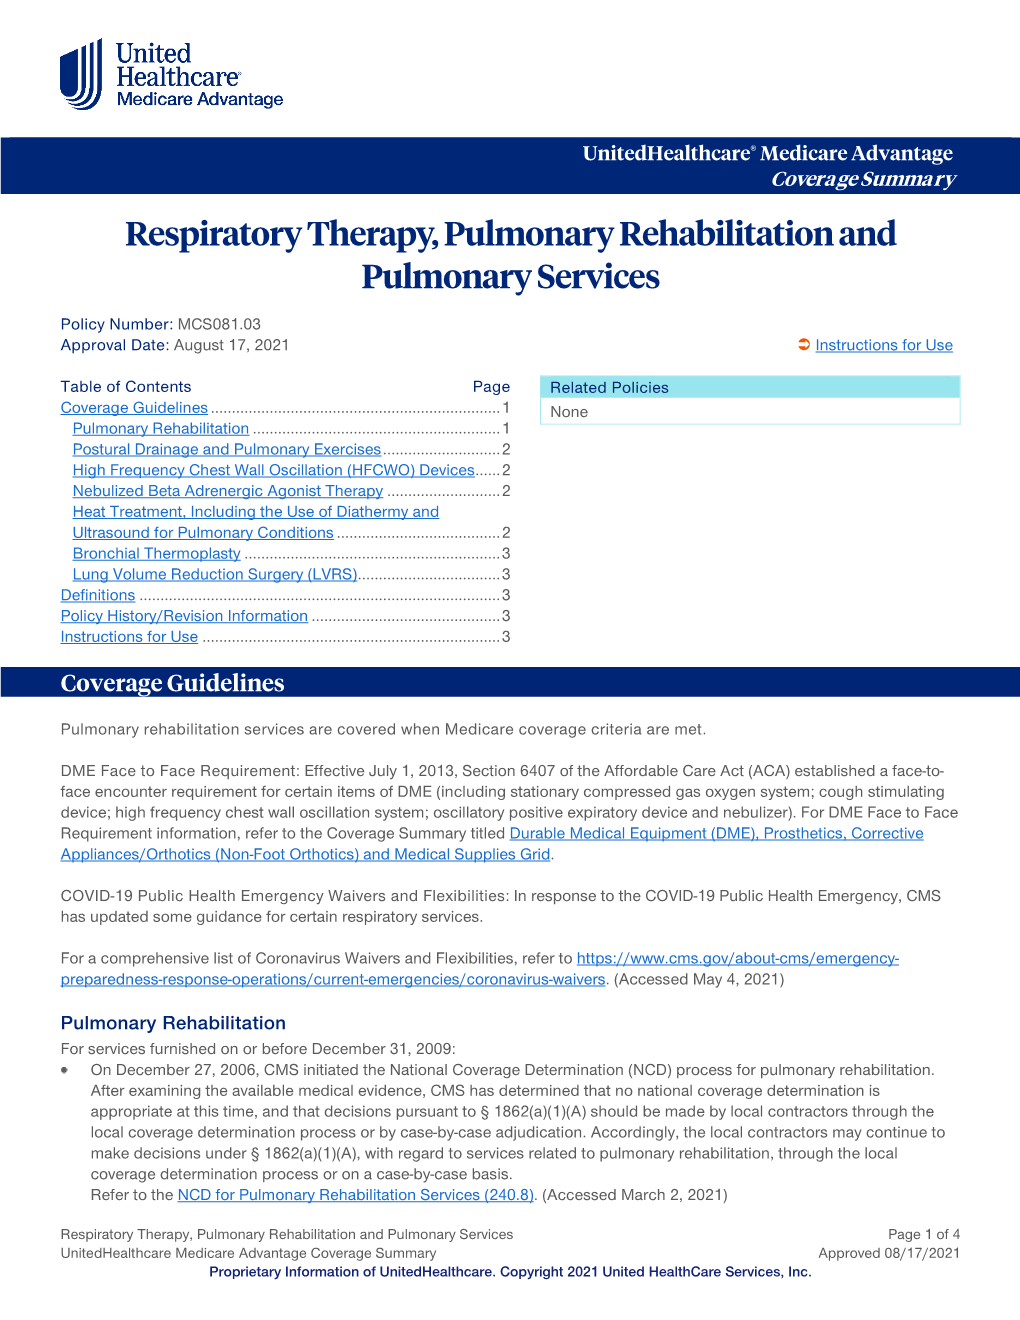 Respiratory Therapy, Pulmonary Rehabilitation and Pulmonary Services – Medicare Advantage Coverage Summary